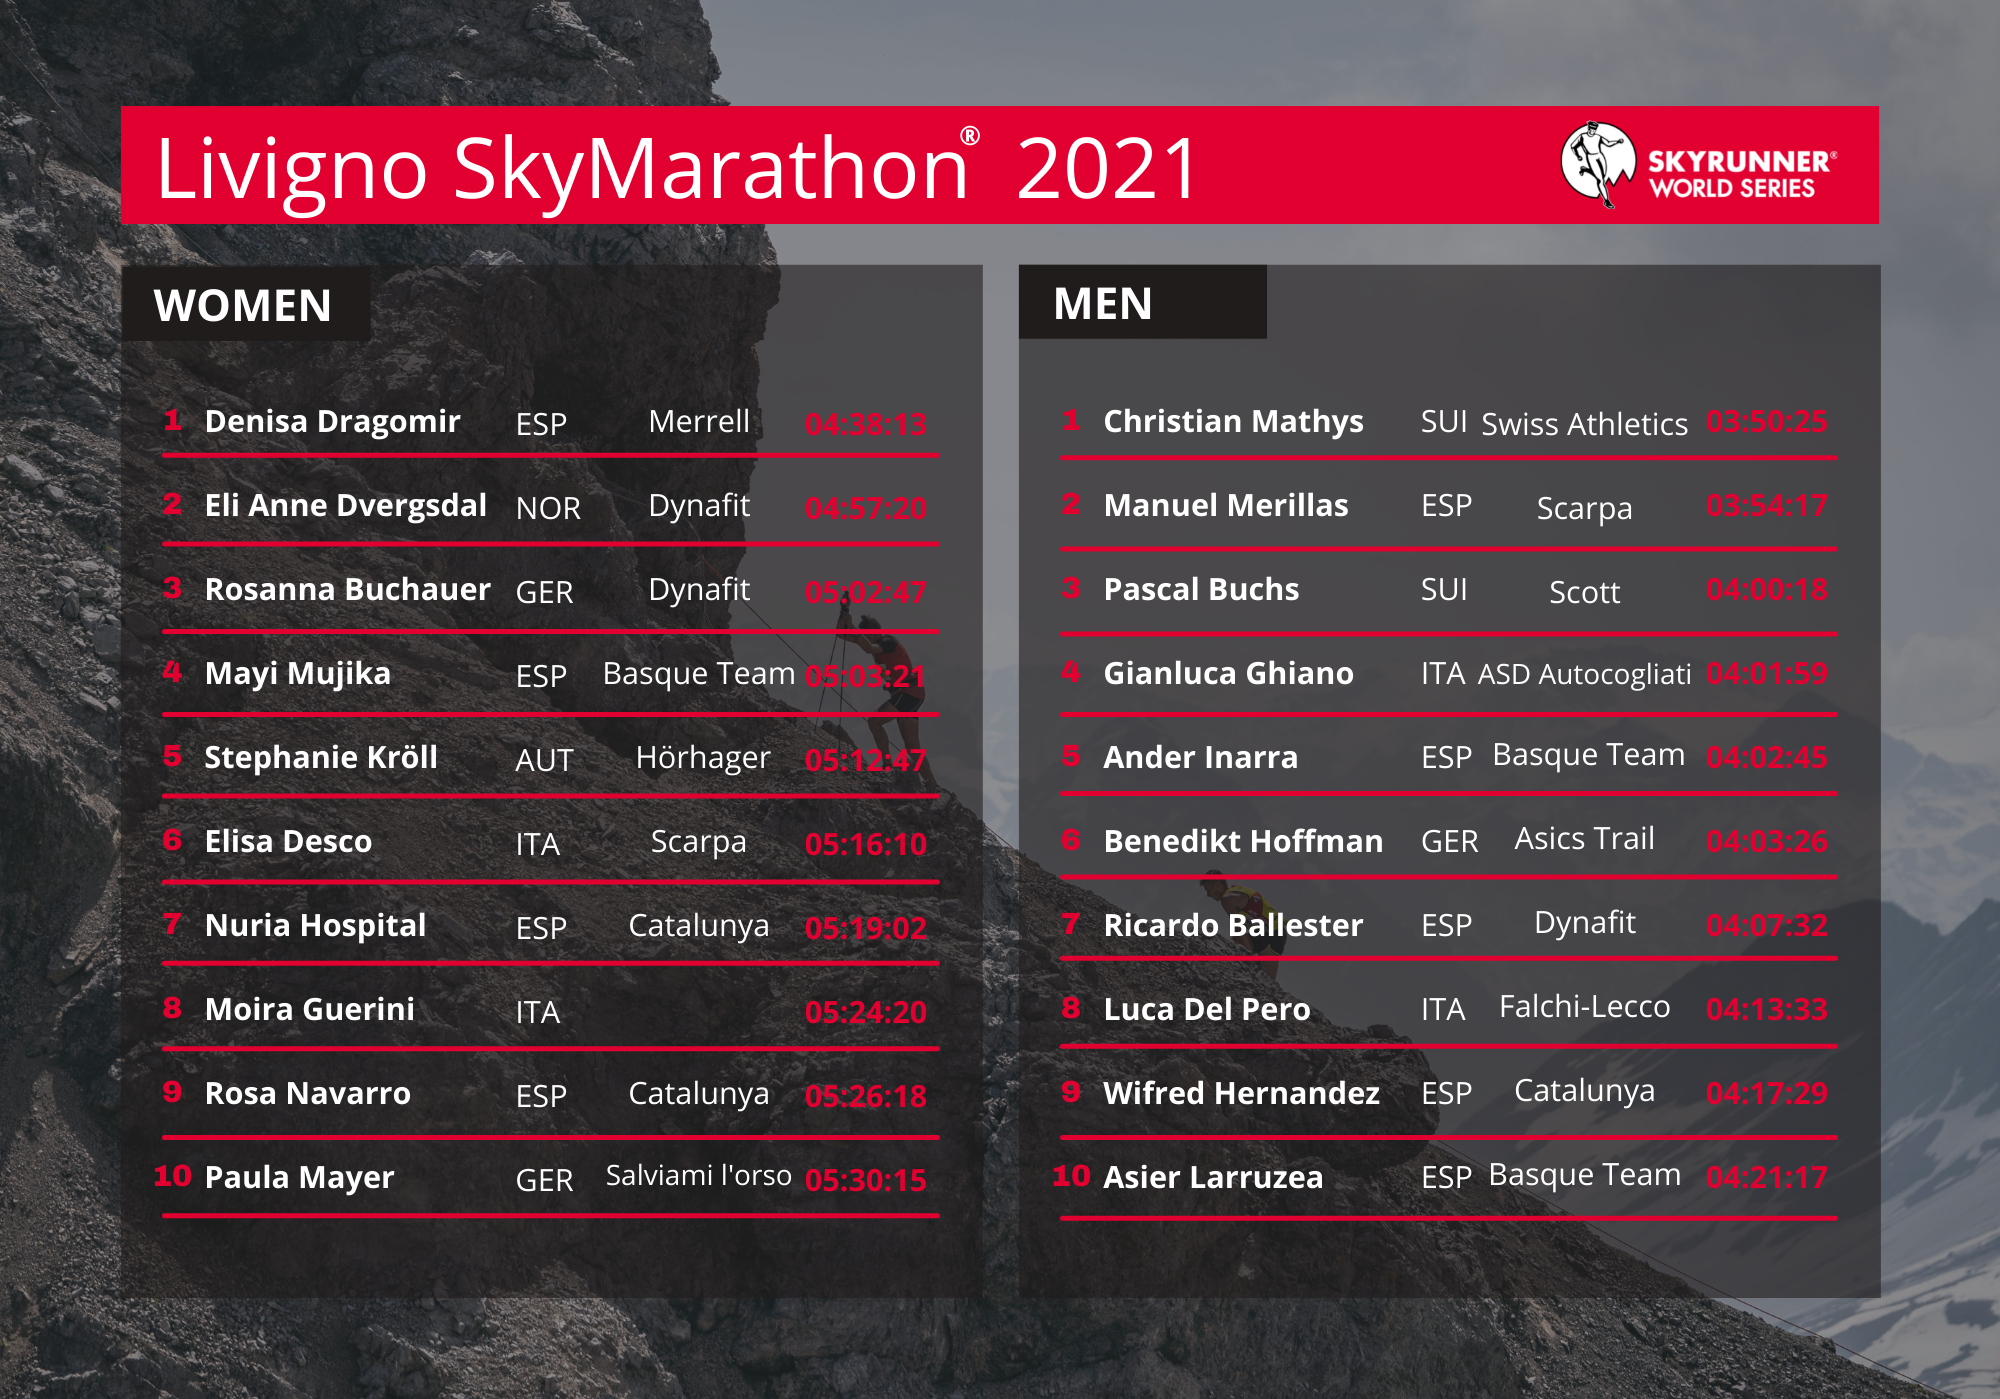 Livigno SkyMarathon 2021 results